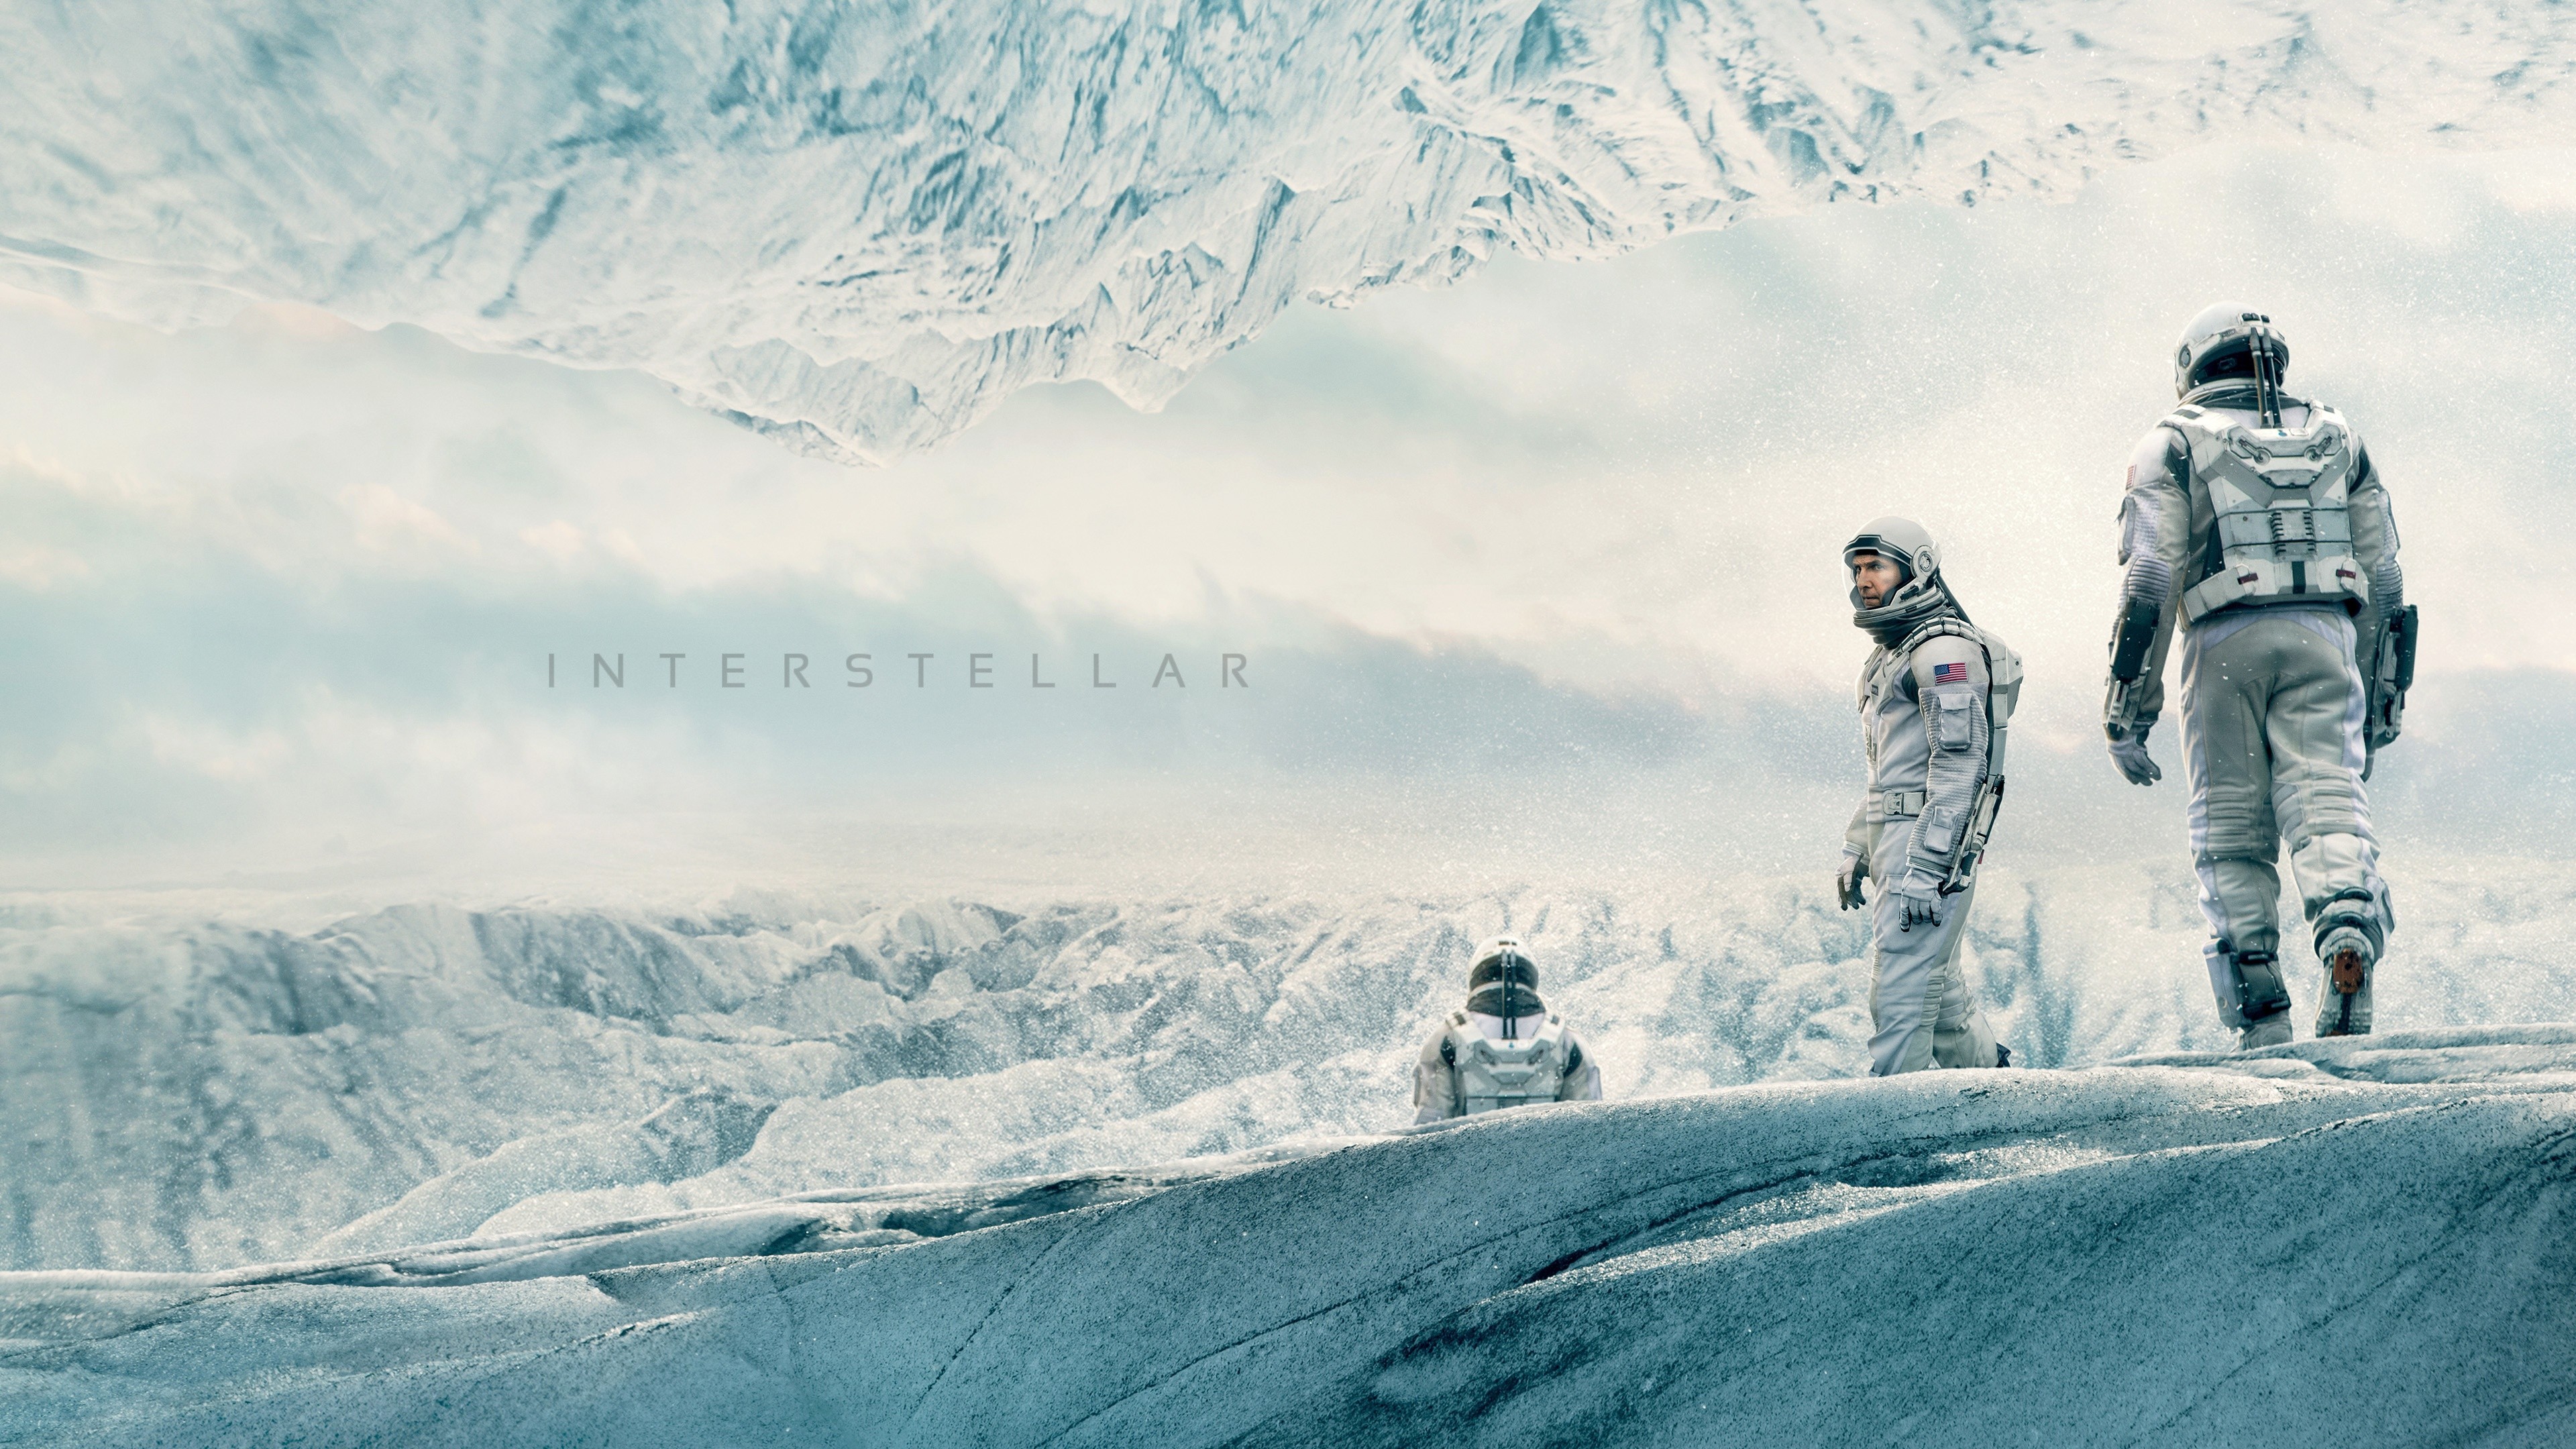 Space, Interstellar movie, Film Stills Wallpapers HD / Desktop and Mobile Backgrounds